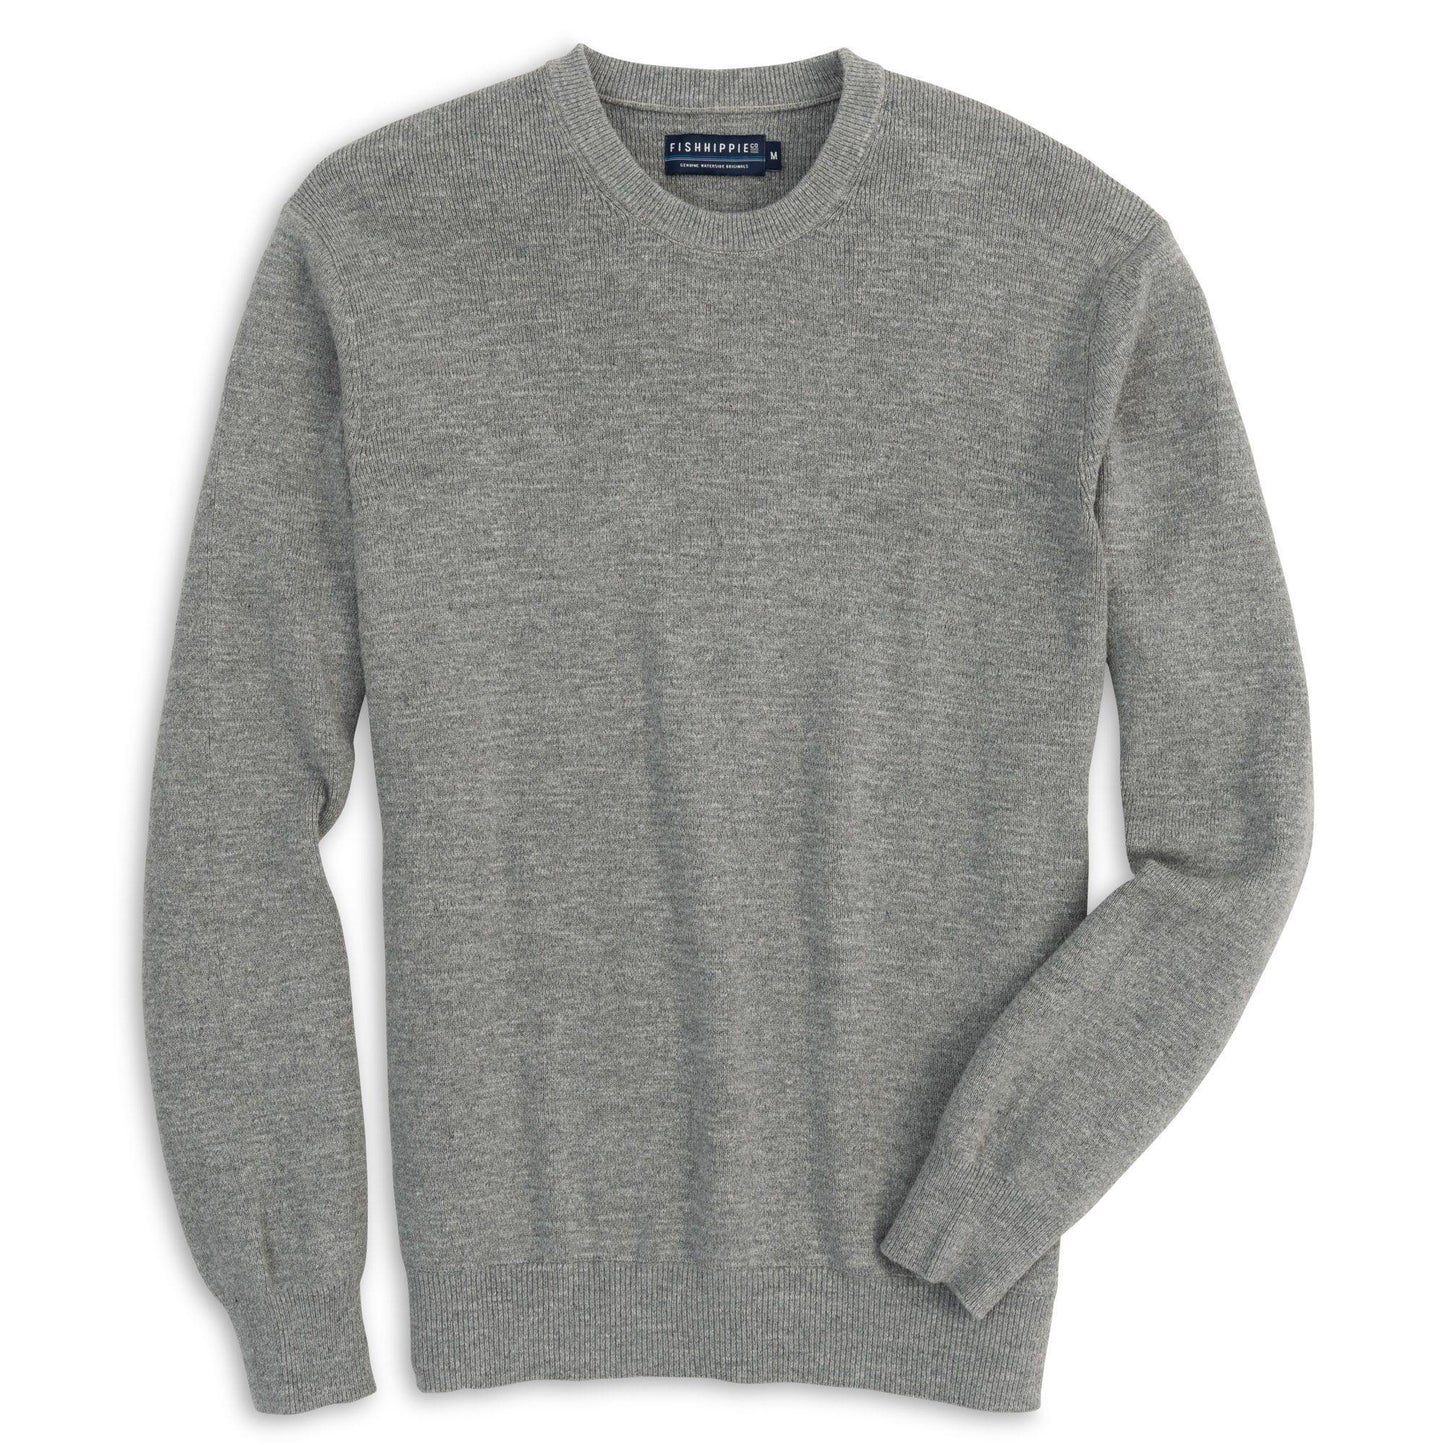 Rumford Crew Neck Cotton Sweater